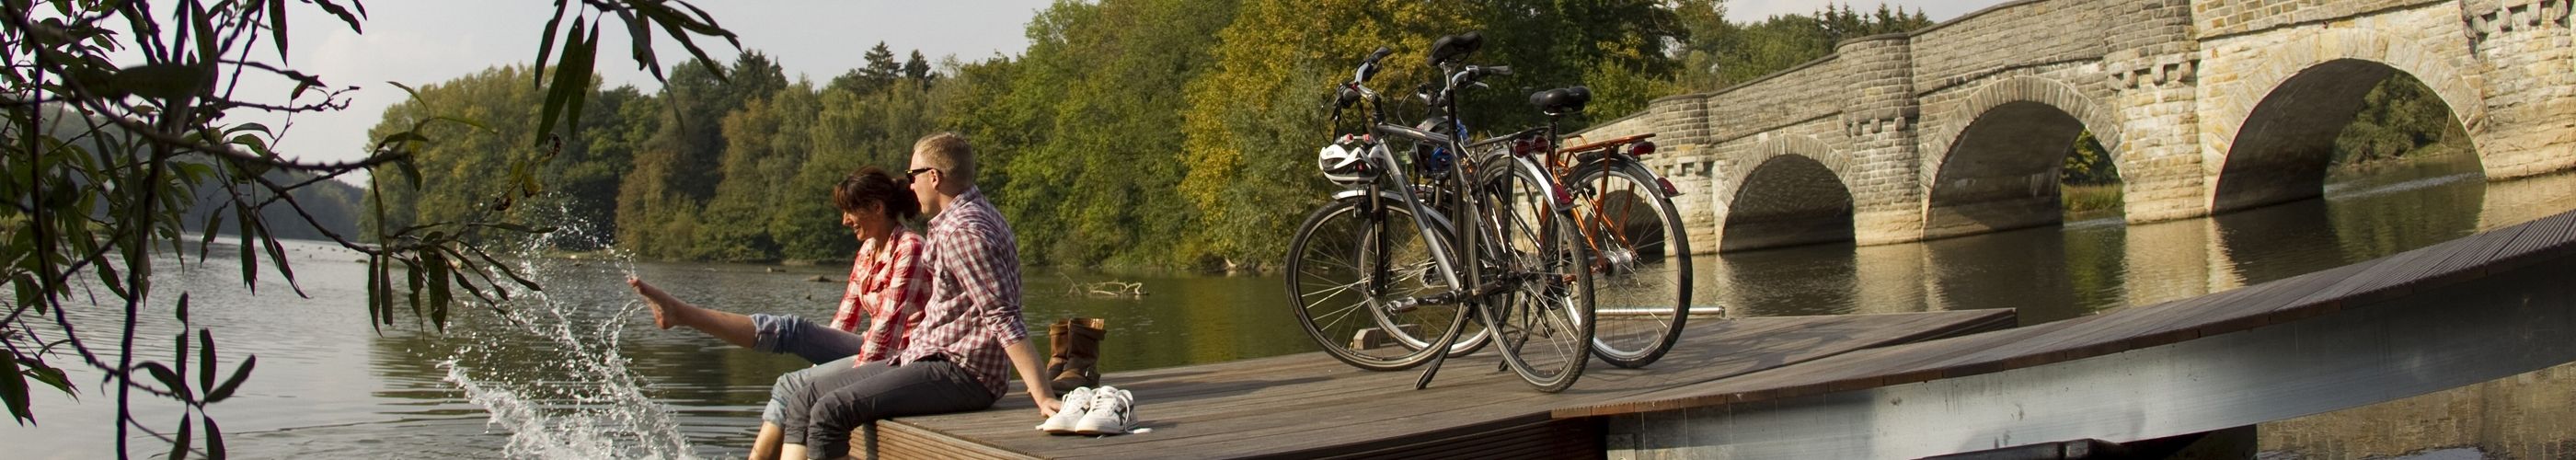 Möhnetal-fietspad in het Sauerland